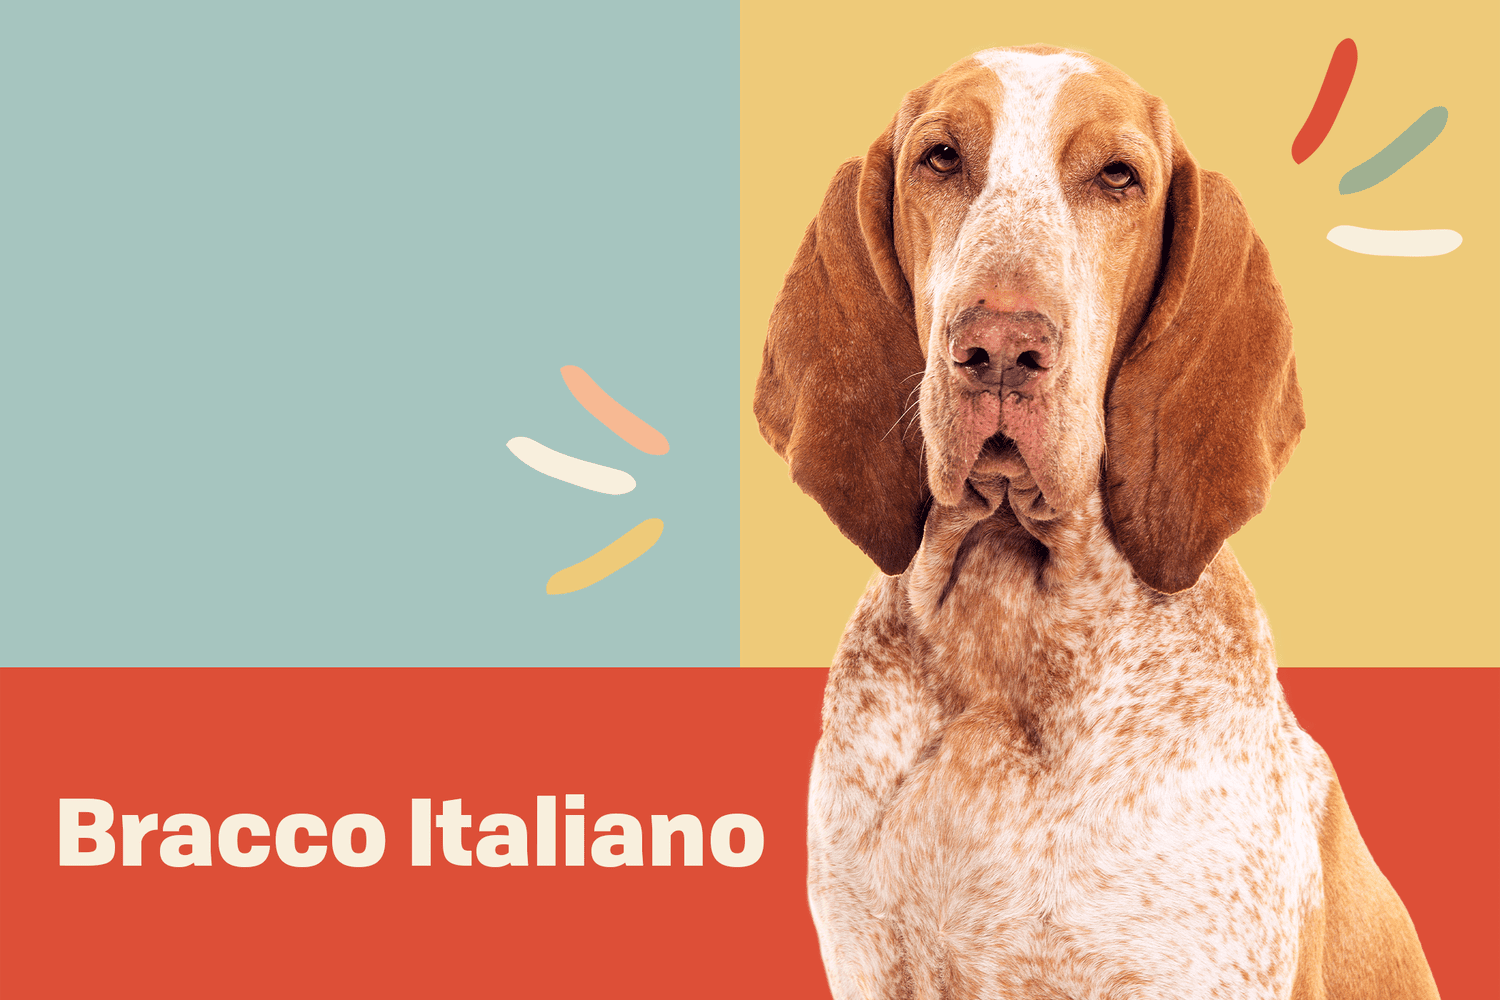 Bracco Italiano on profile treatment background